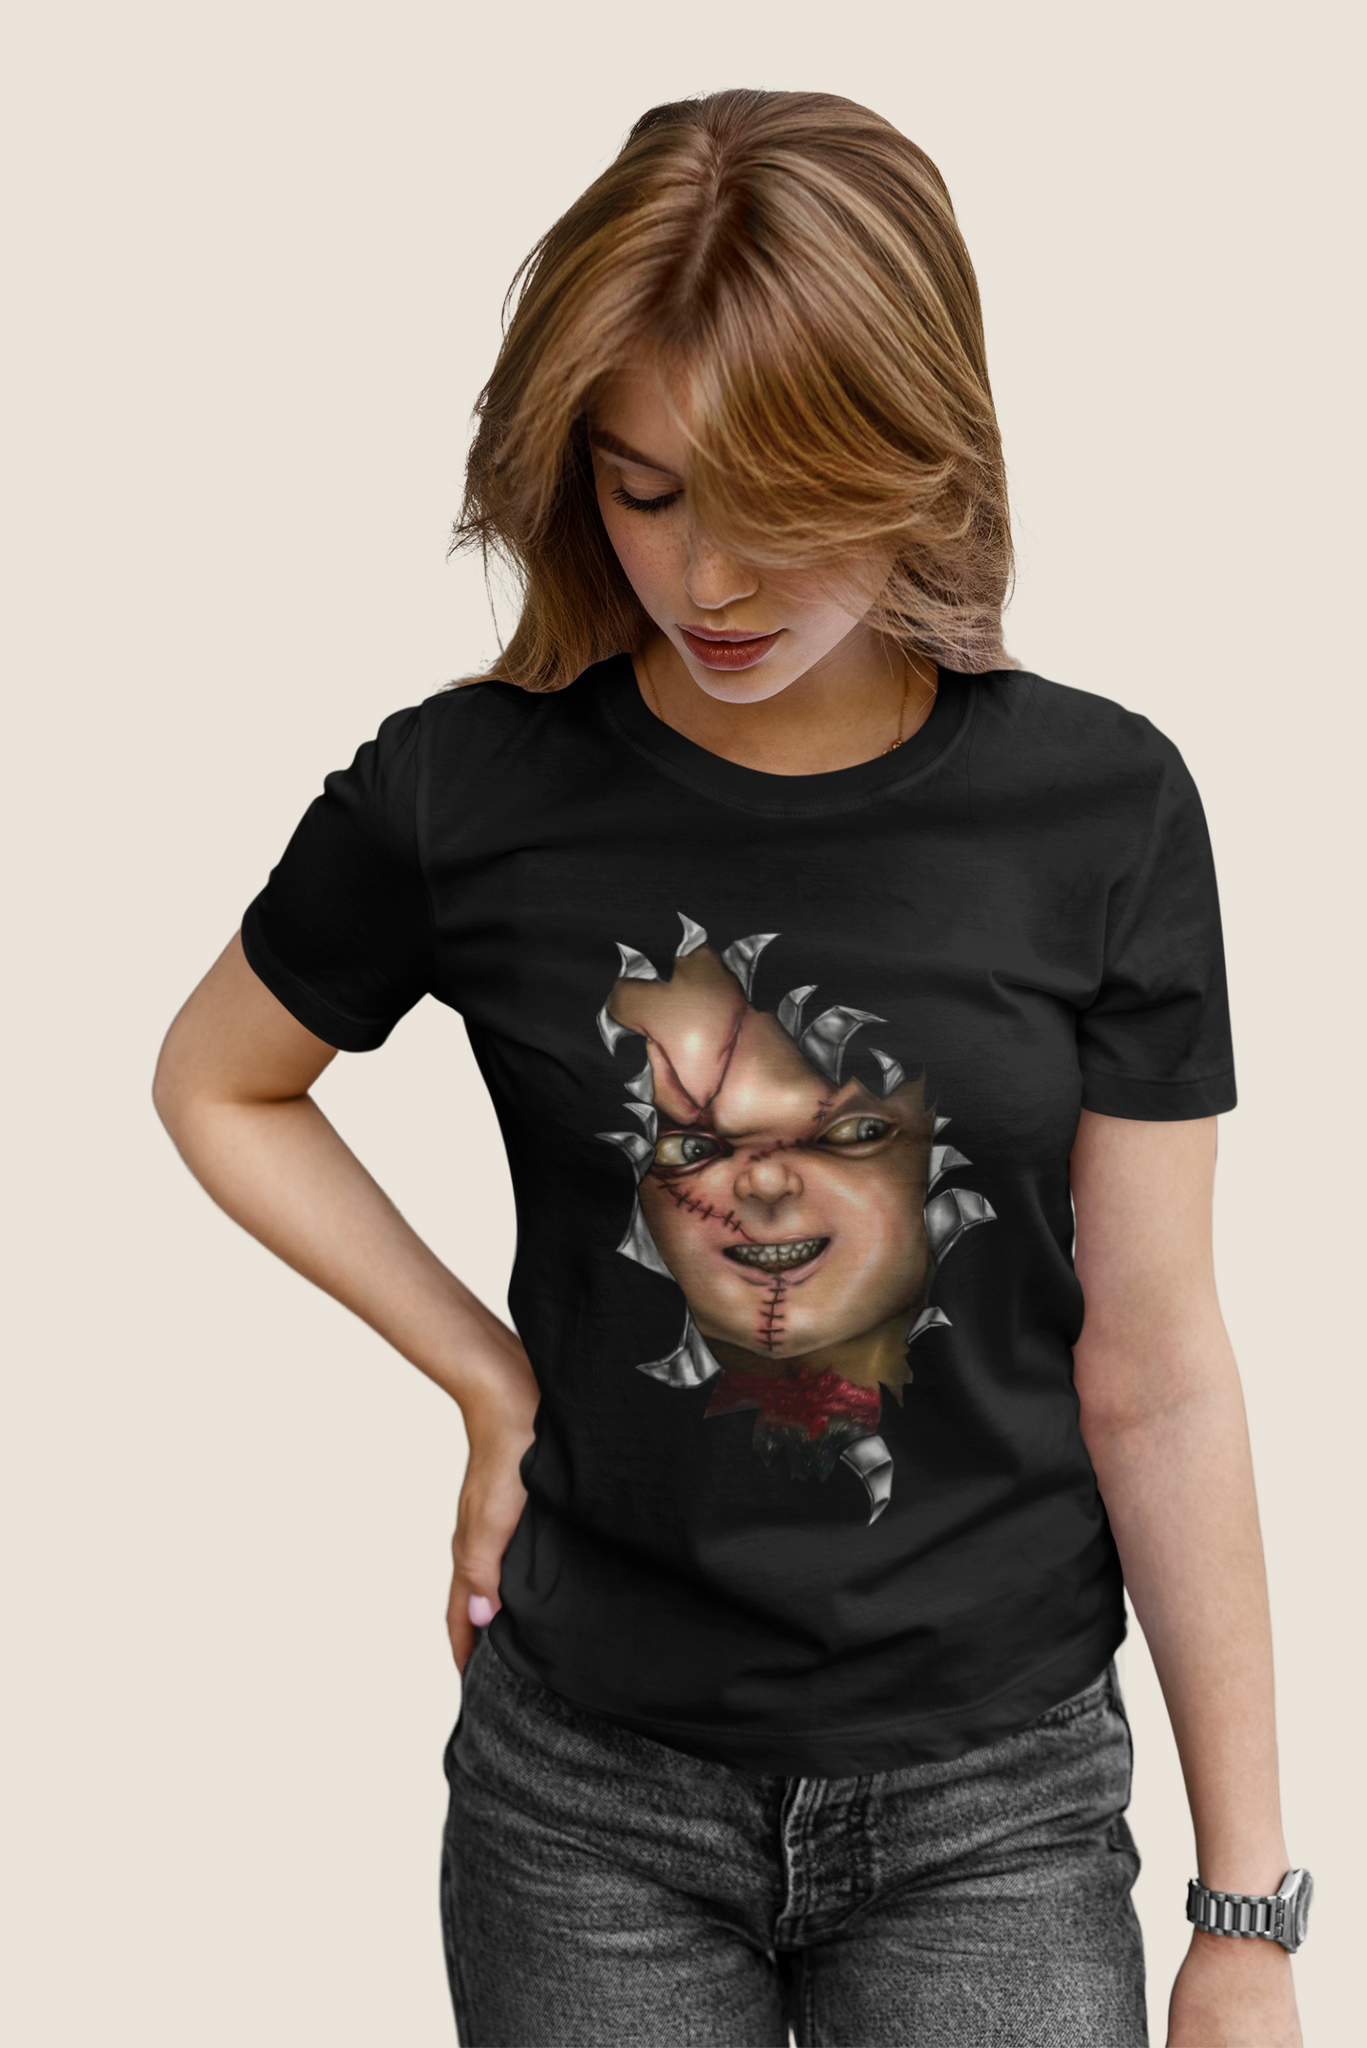 Chucky T Shirt, Horror Character Tshirt, Halloween Scary T Shirt, Halloween Gifts